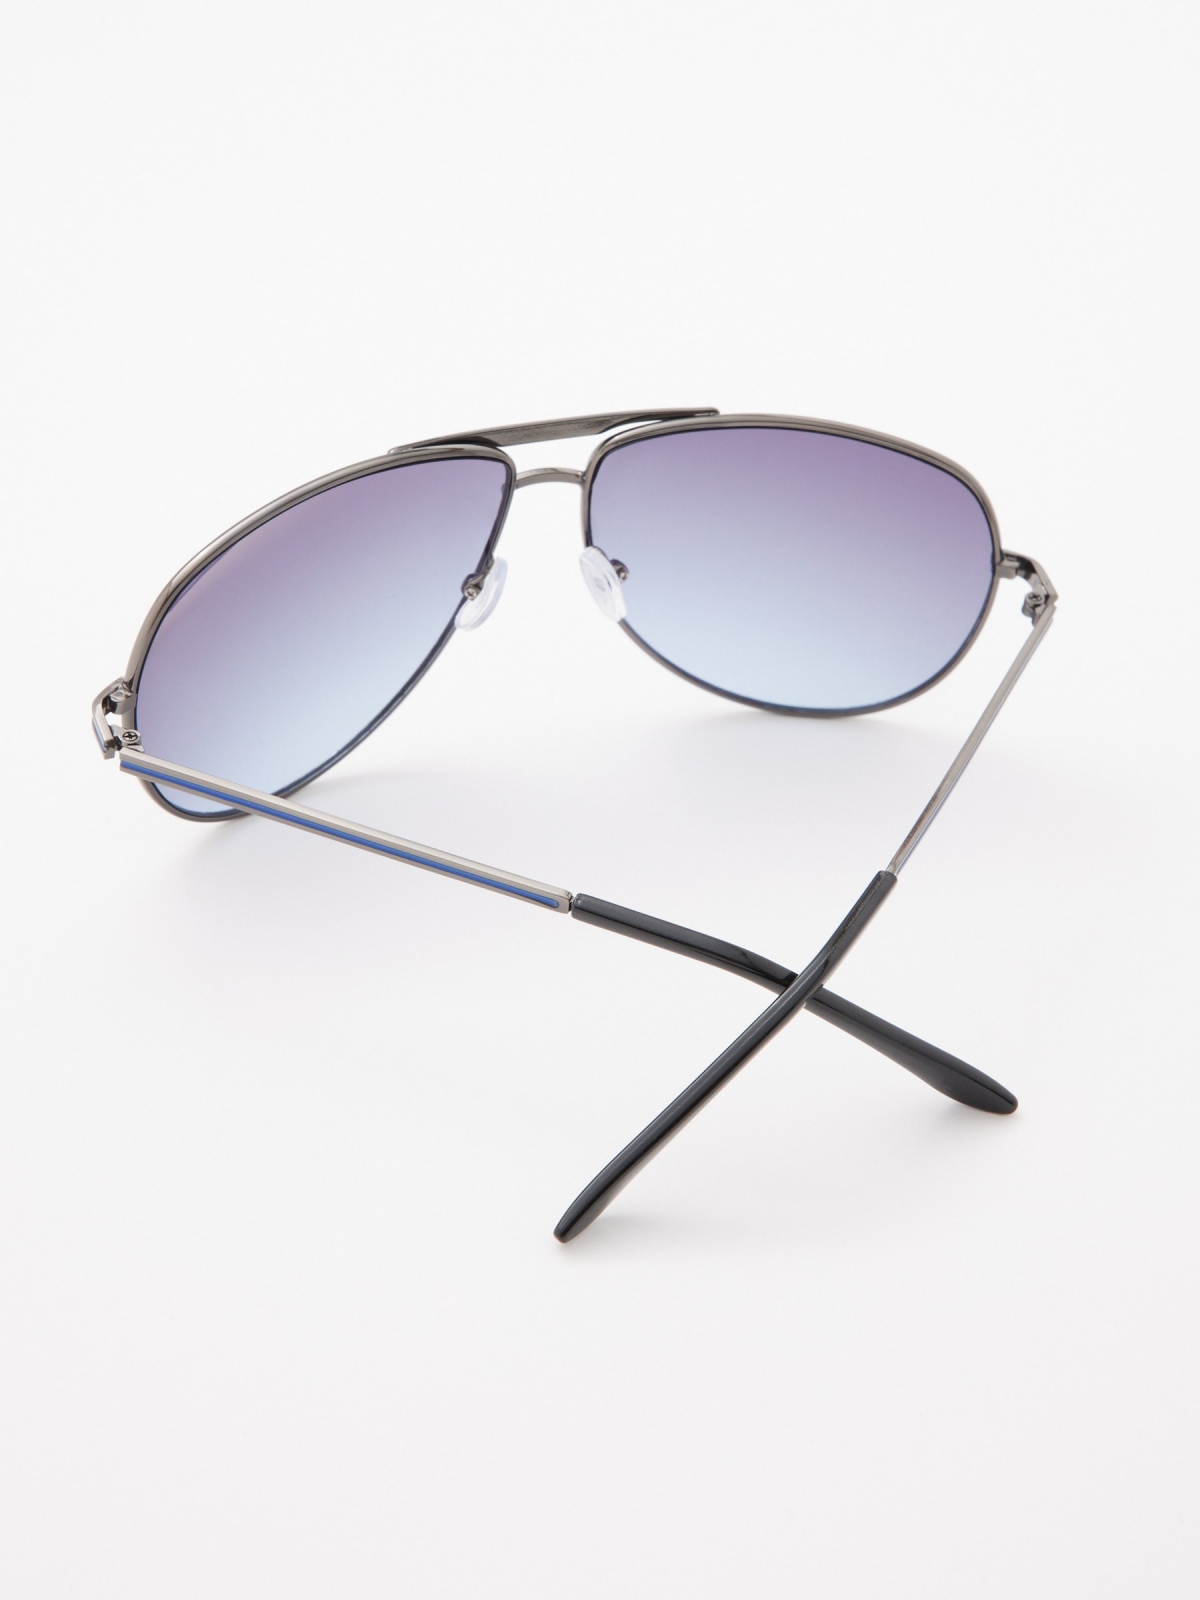 Metallic aviator sunglasses blue detail view